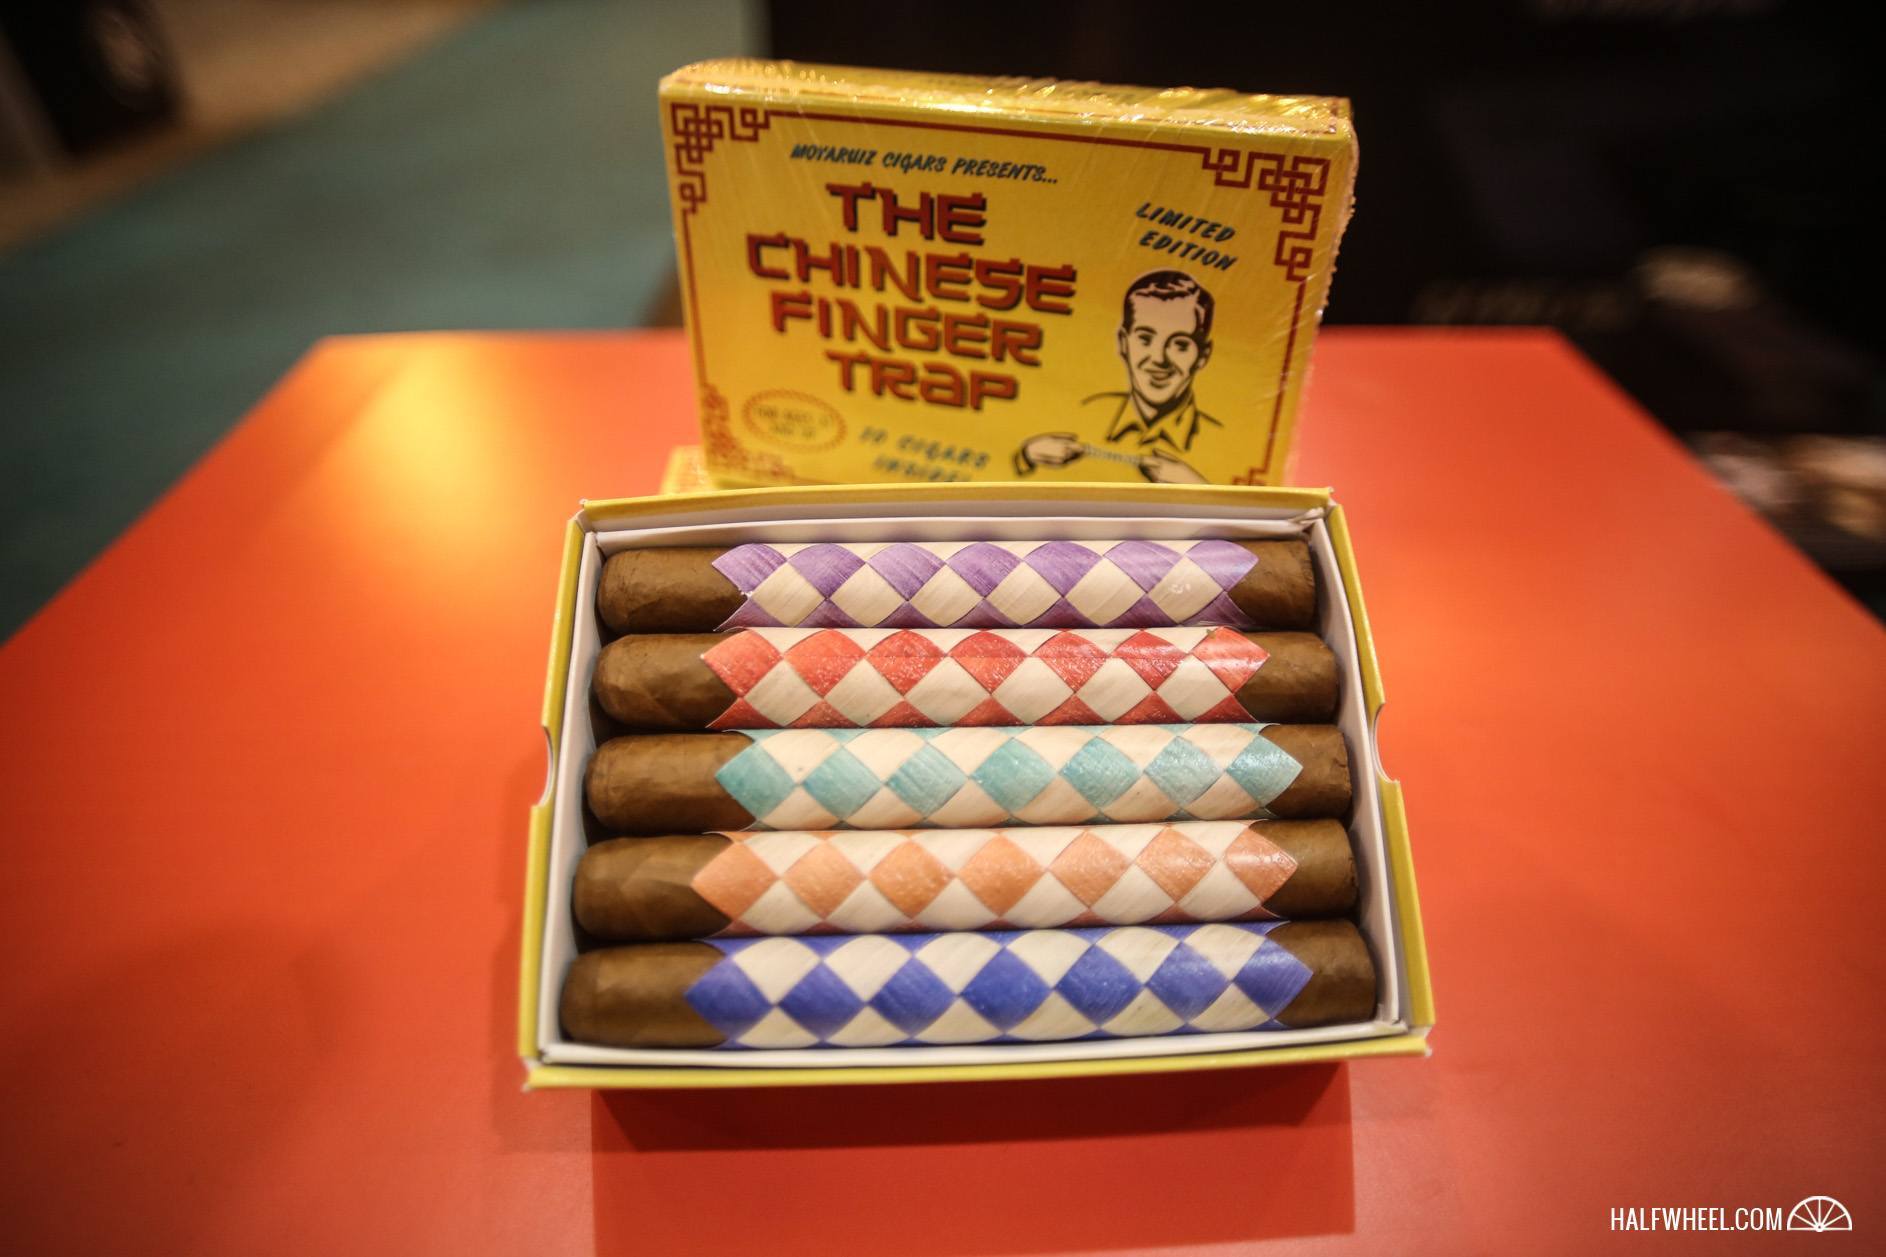 MoyaRuiz Cigars Chinese Finger trap